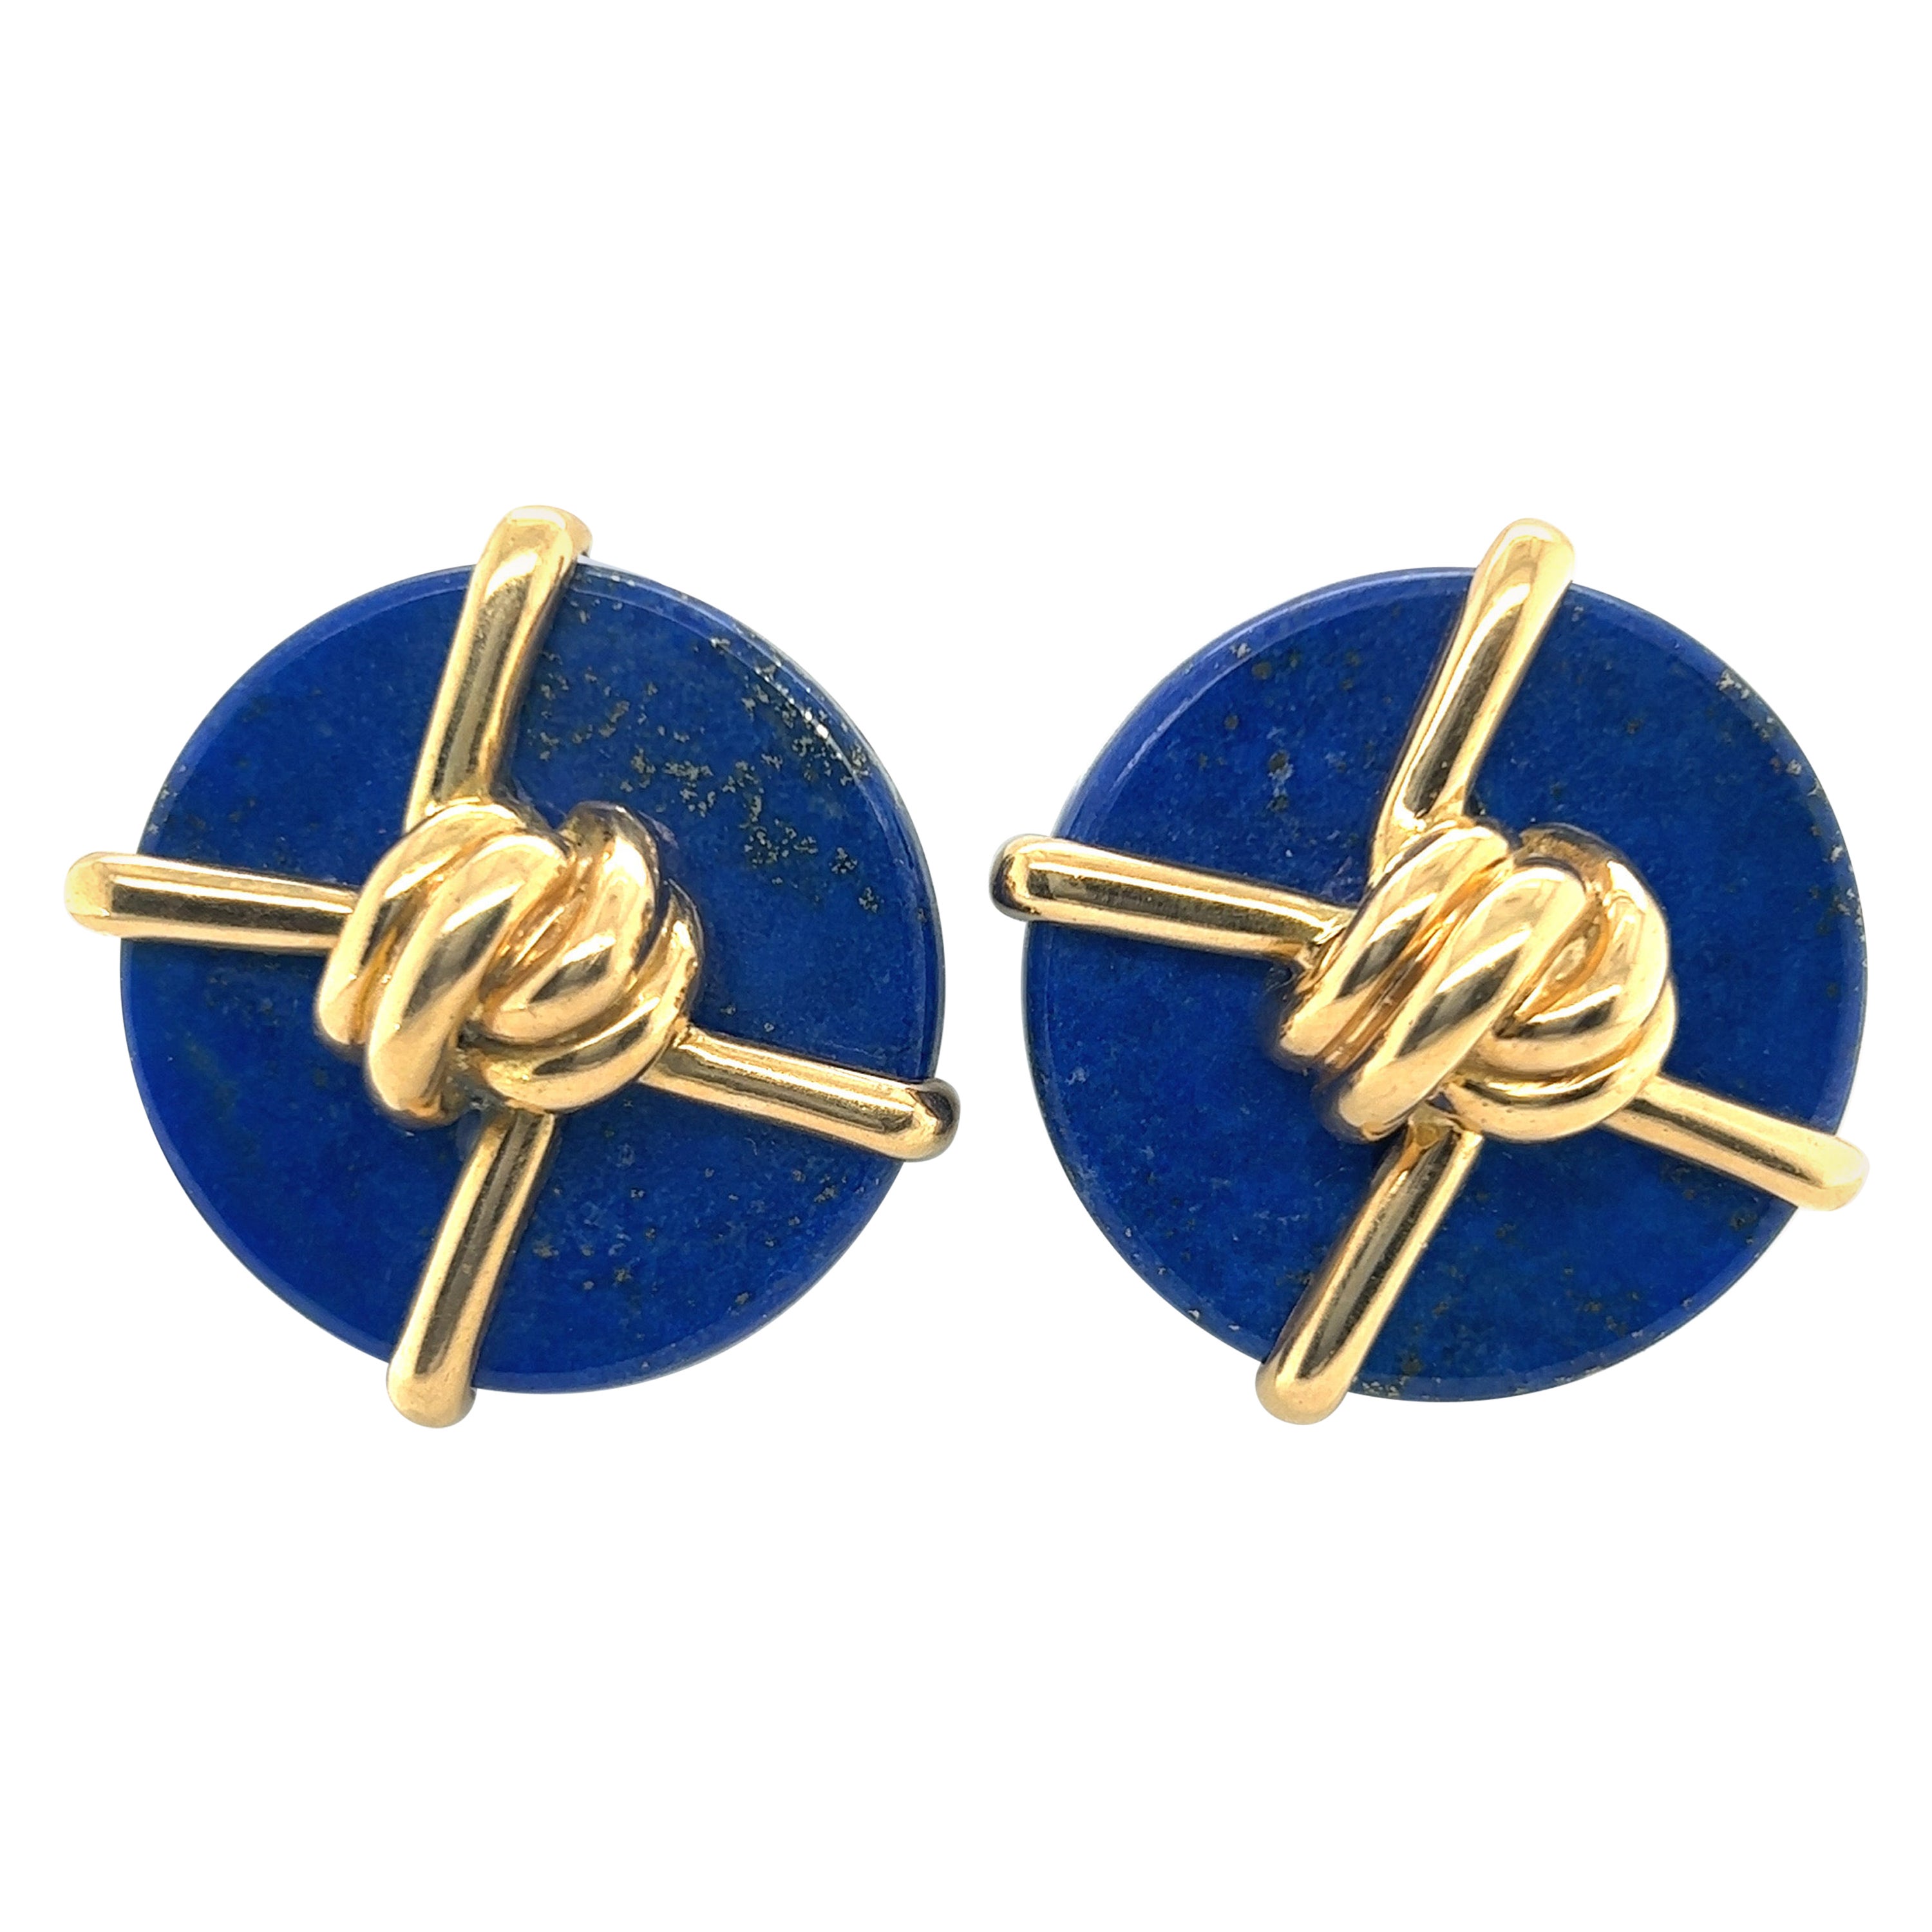 Aldo Cipullo for Cartier 18 Karat Gold Lapis Lazuli Earrings, 1973 For Sale